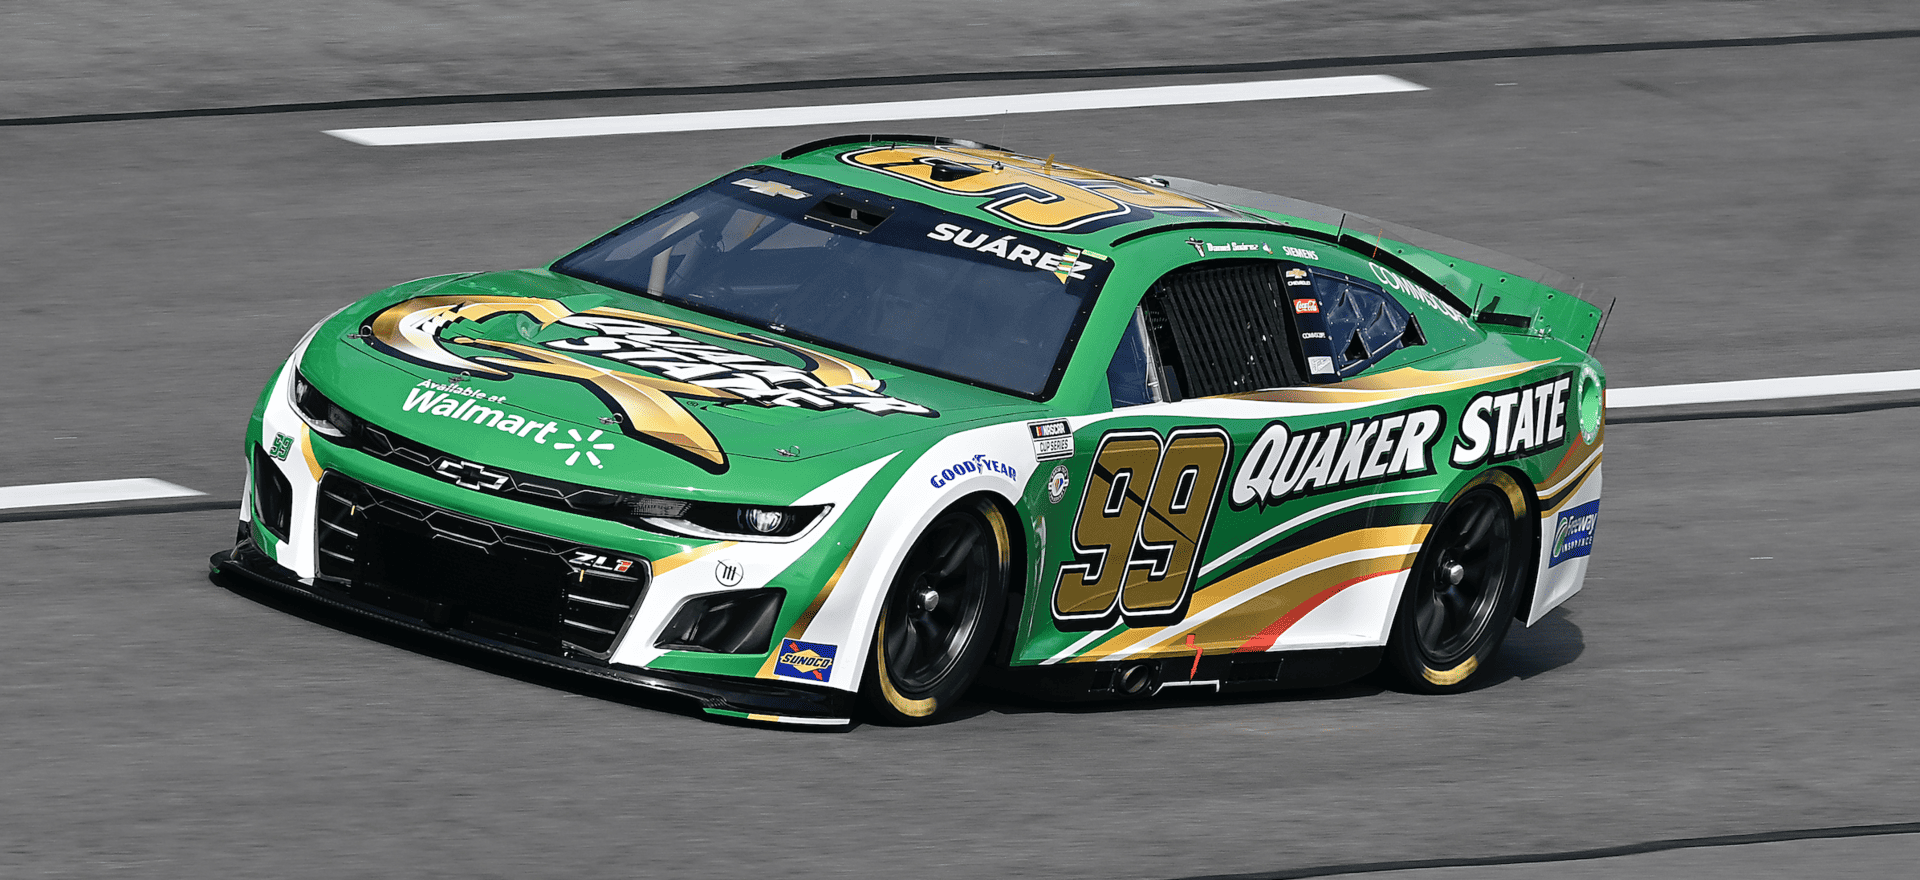 Trackhouse Racing's Daniel Suarez scored a runner-up finish at Atlanta Motor Speedway as the push towards NASCAR's postseason intensifies.